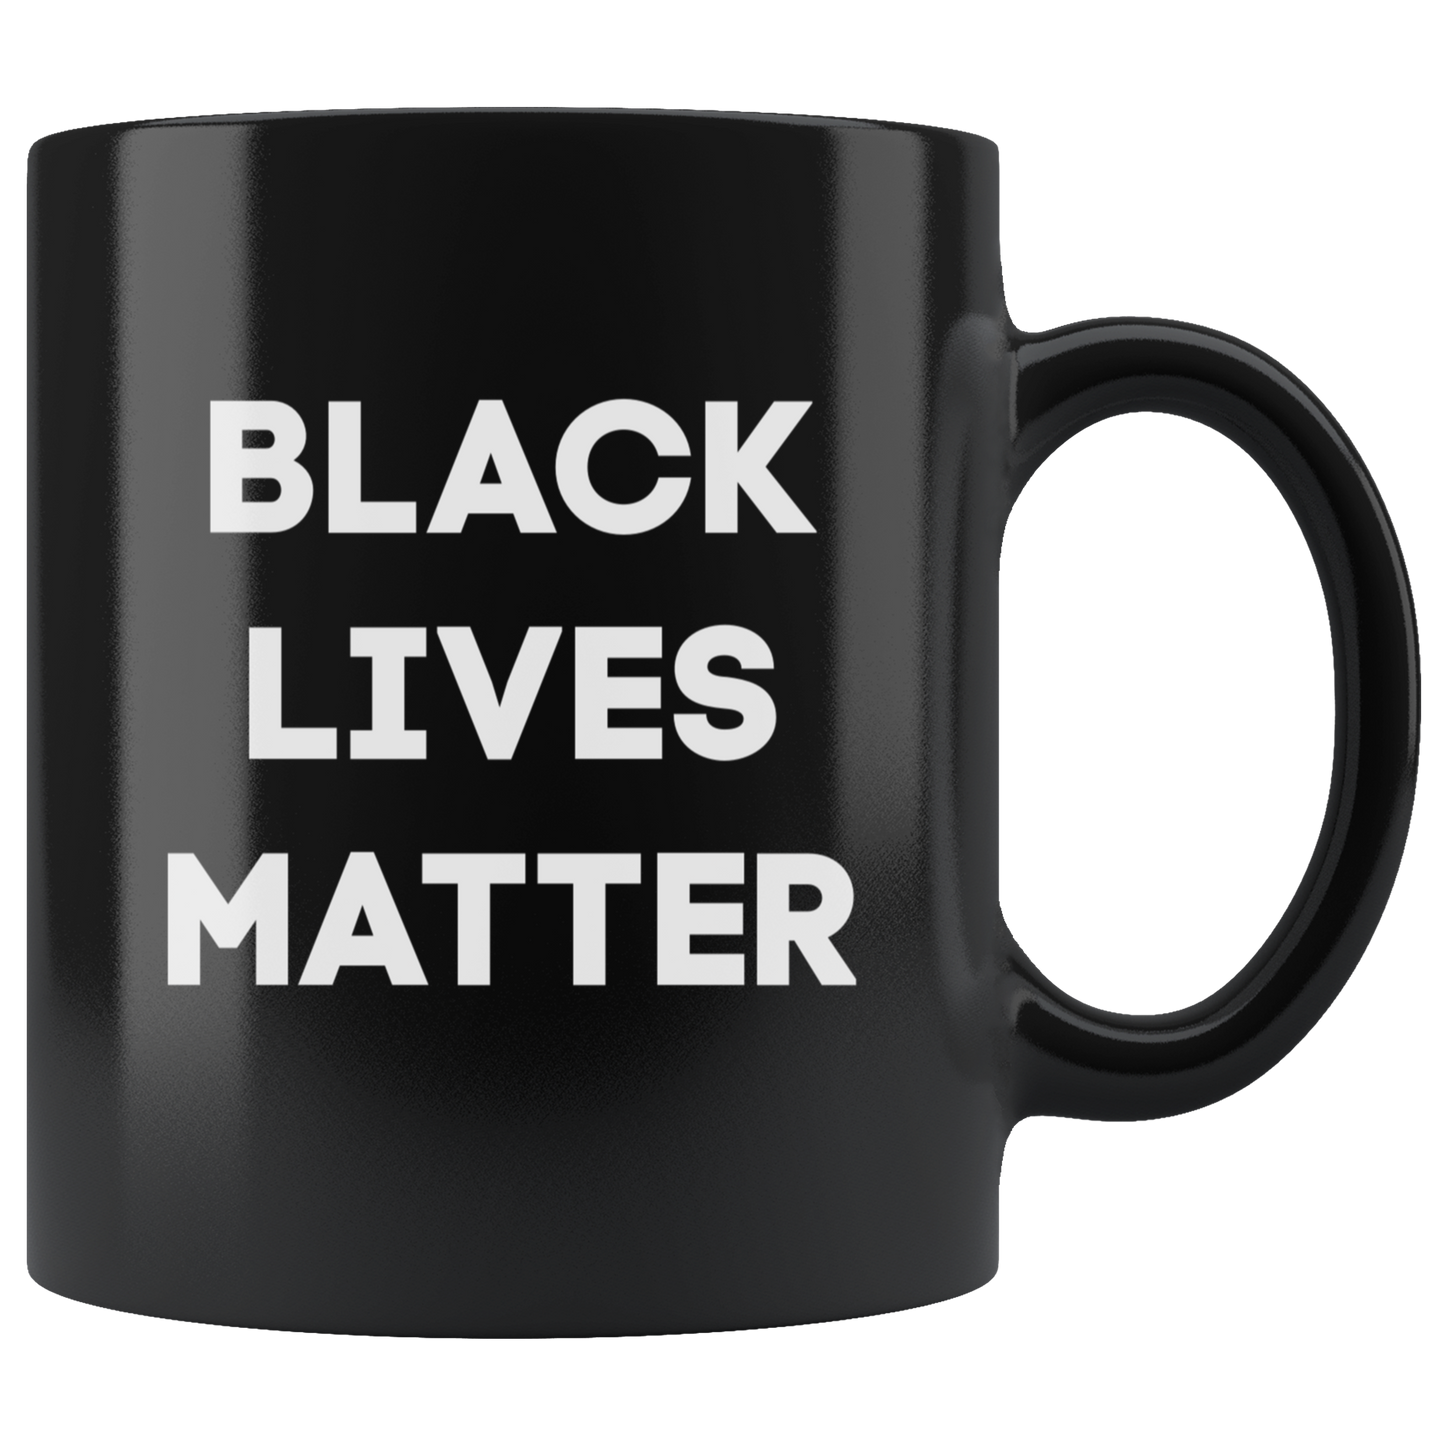 Black Lives Matter Coffee Mug Gift Equal Rights Civil Rights Activist Justice Black America